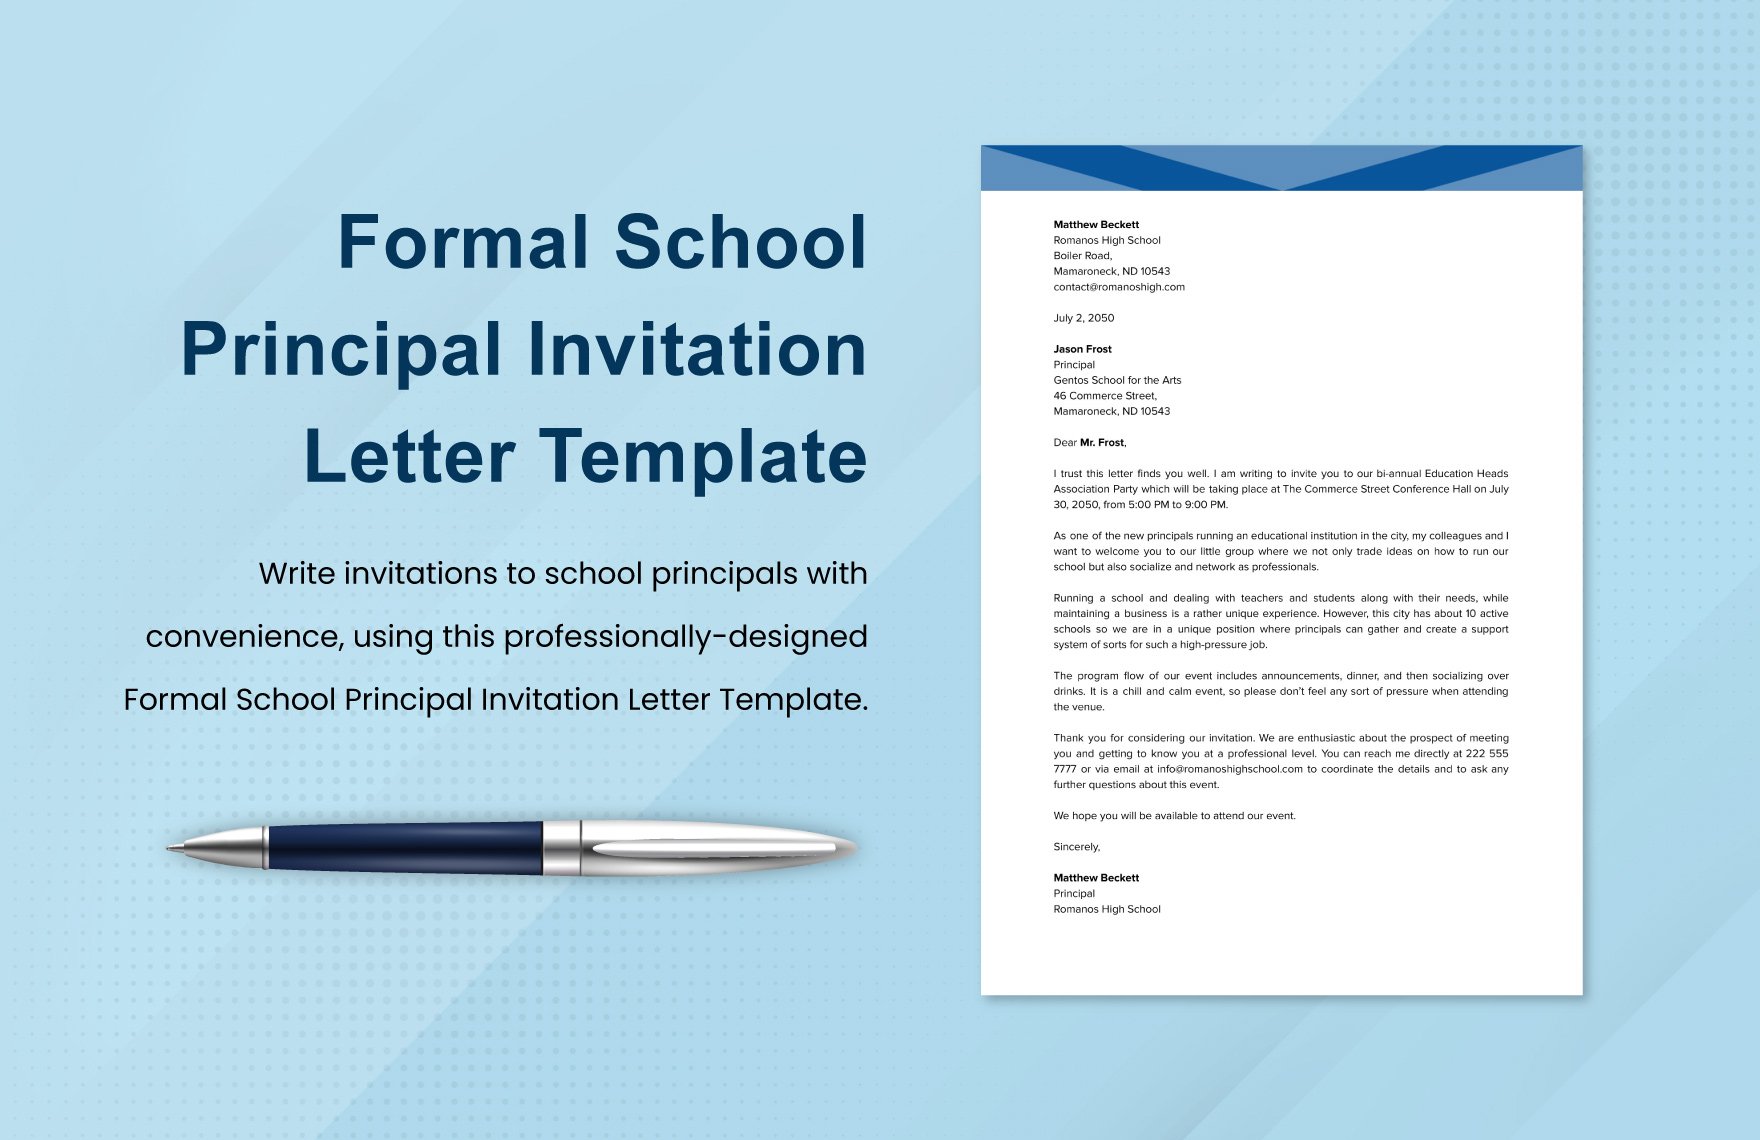 Formal School Principal Invitation Letter Template in Word, Google Docs, PDF